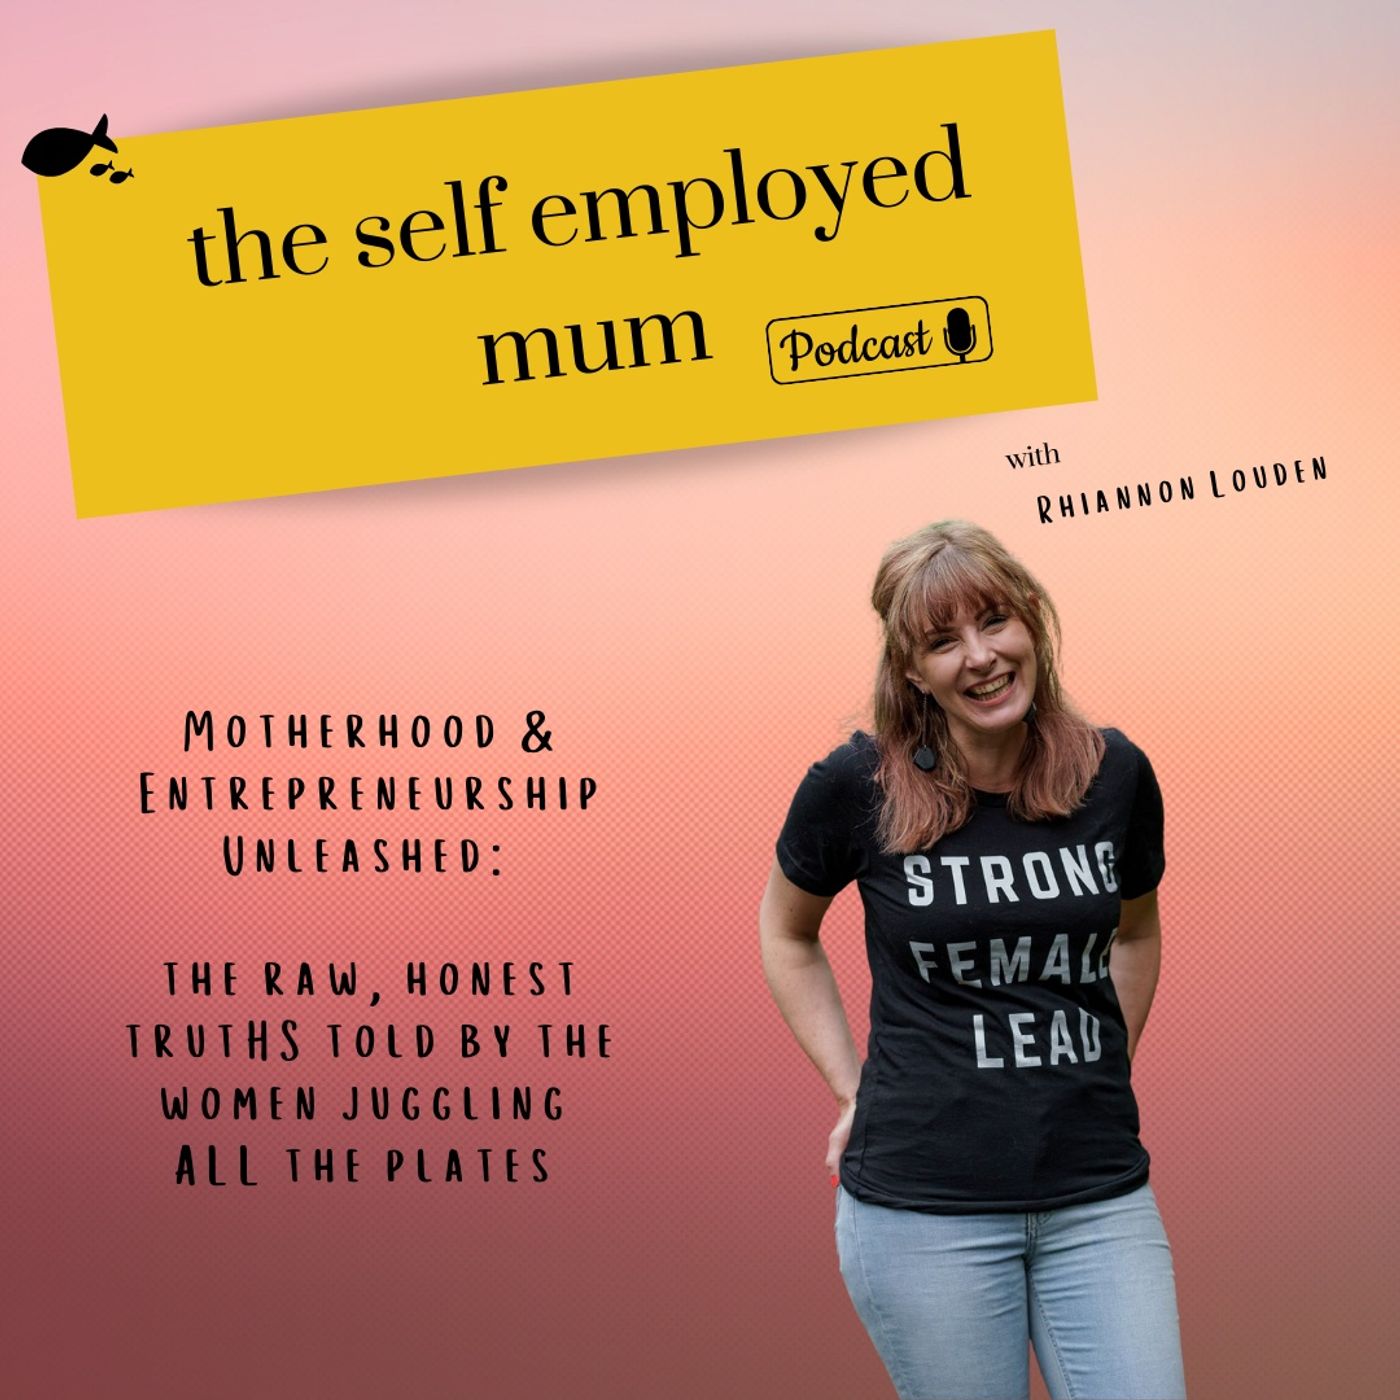 EP 37: Small Fish Big Pod becomes The Self Employed Mum